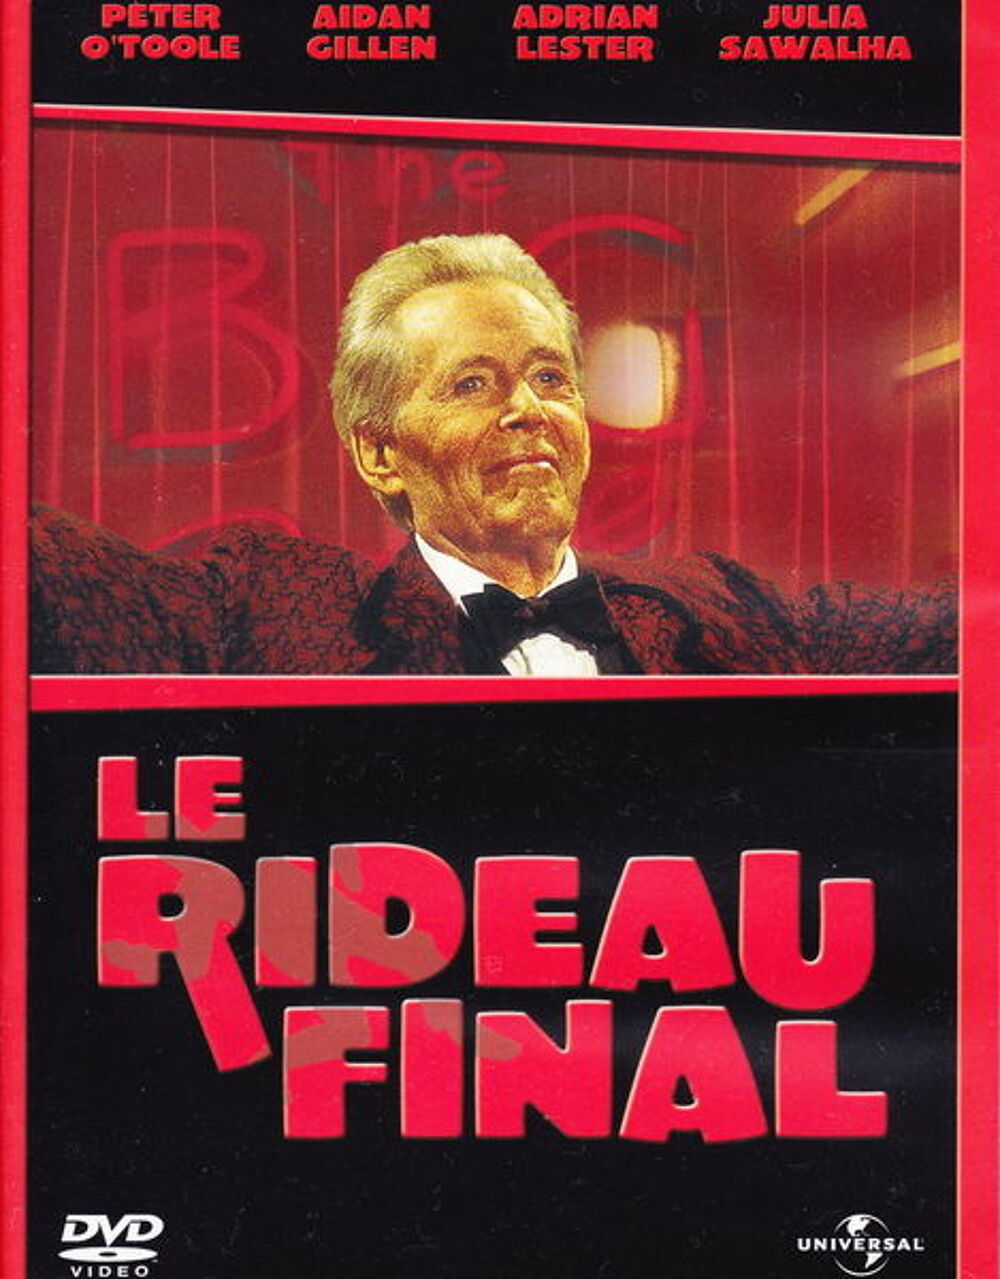 DVD Le Rideau final
DVD et blu-ray